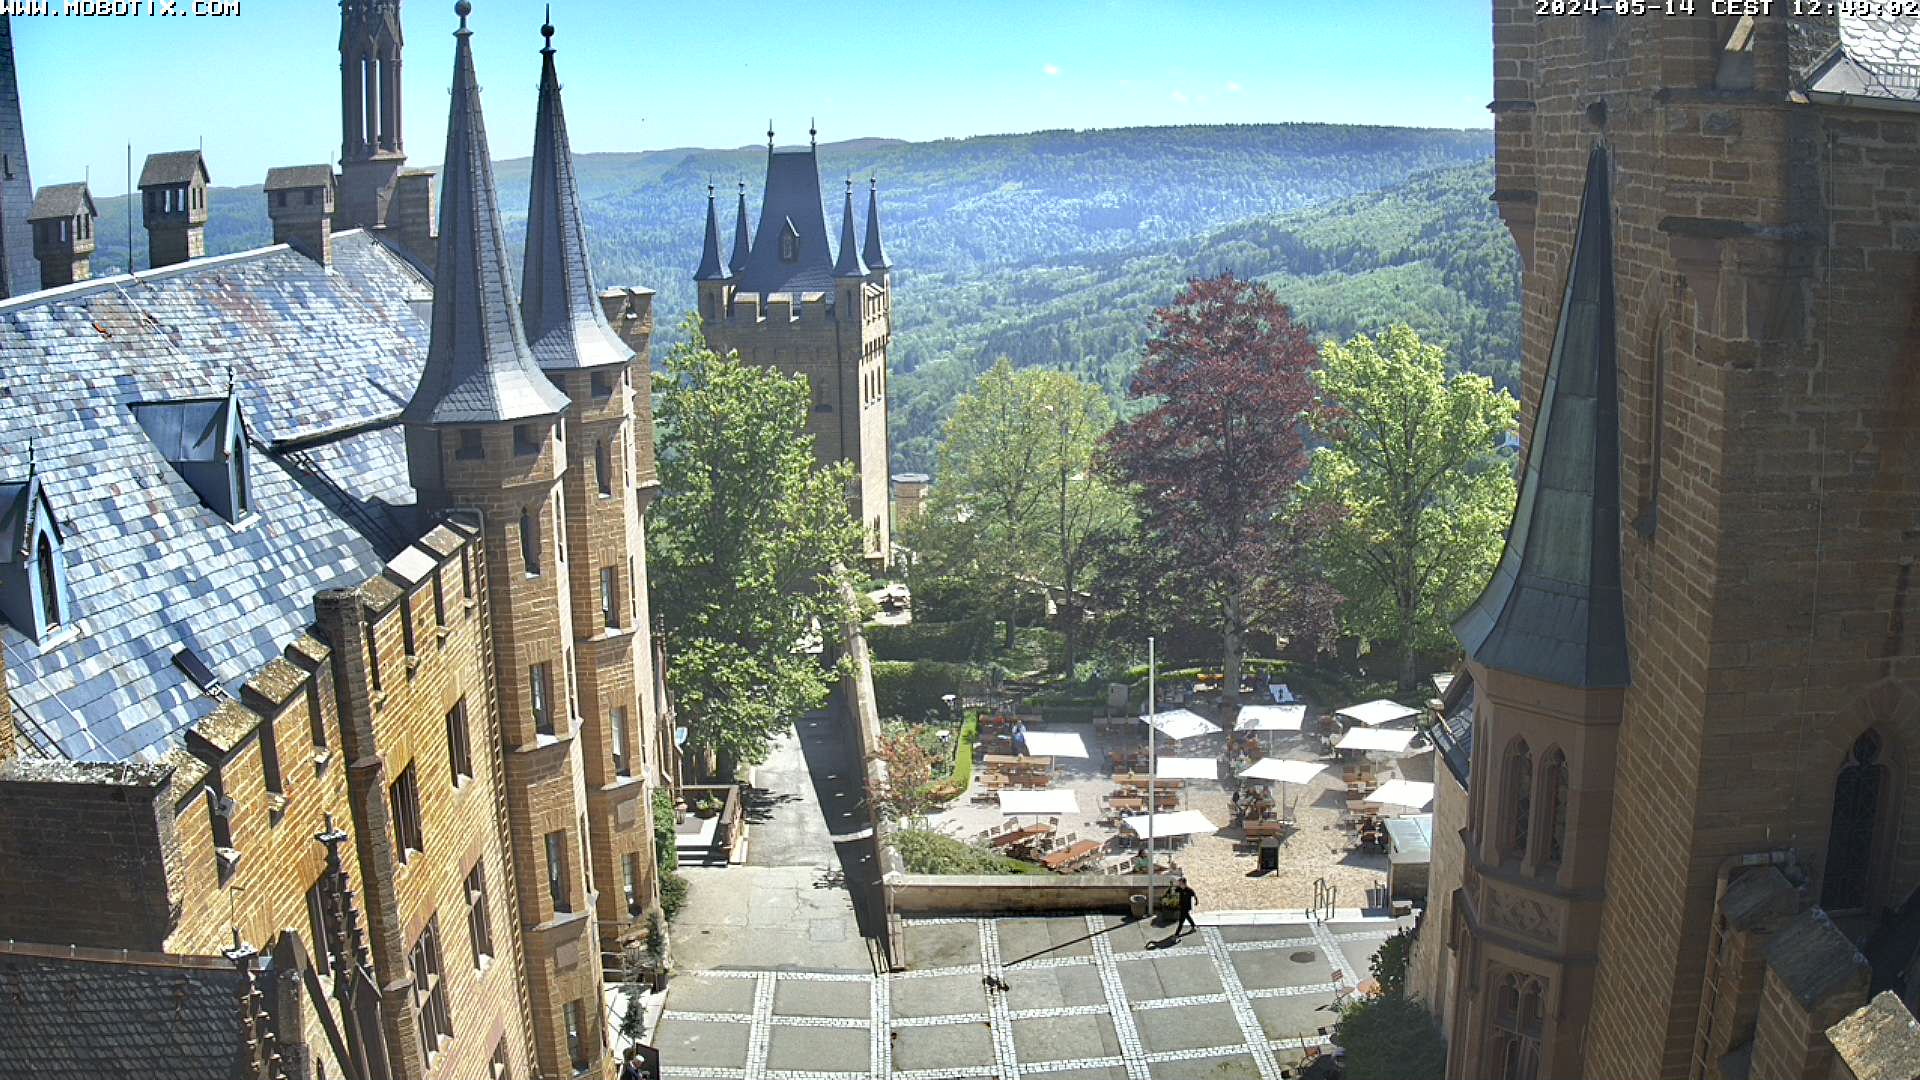 Burg Hohenzollern Dom. 12:50